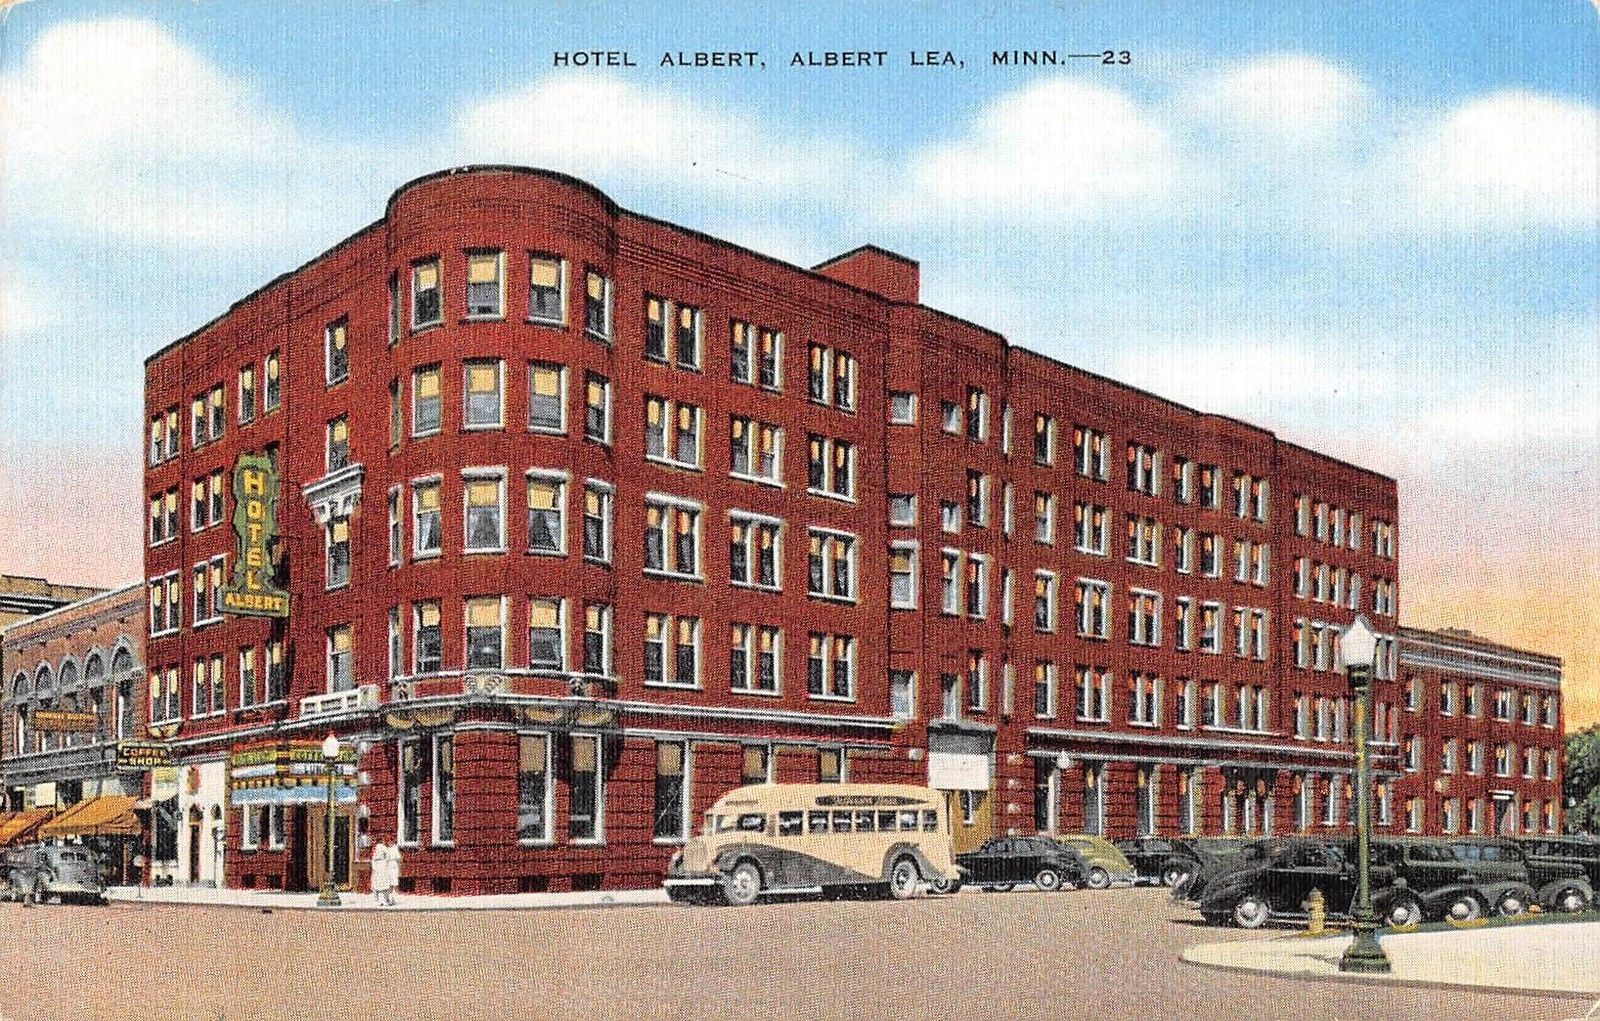 Hotel Albert, Albert Lea, Minnesota Antique Postcard N5487 - Mary L